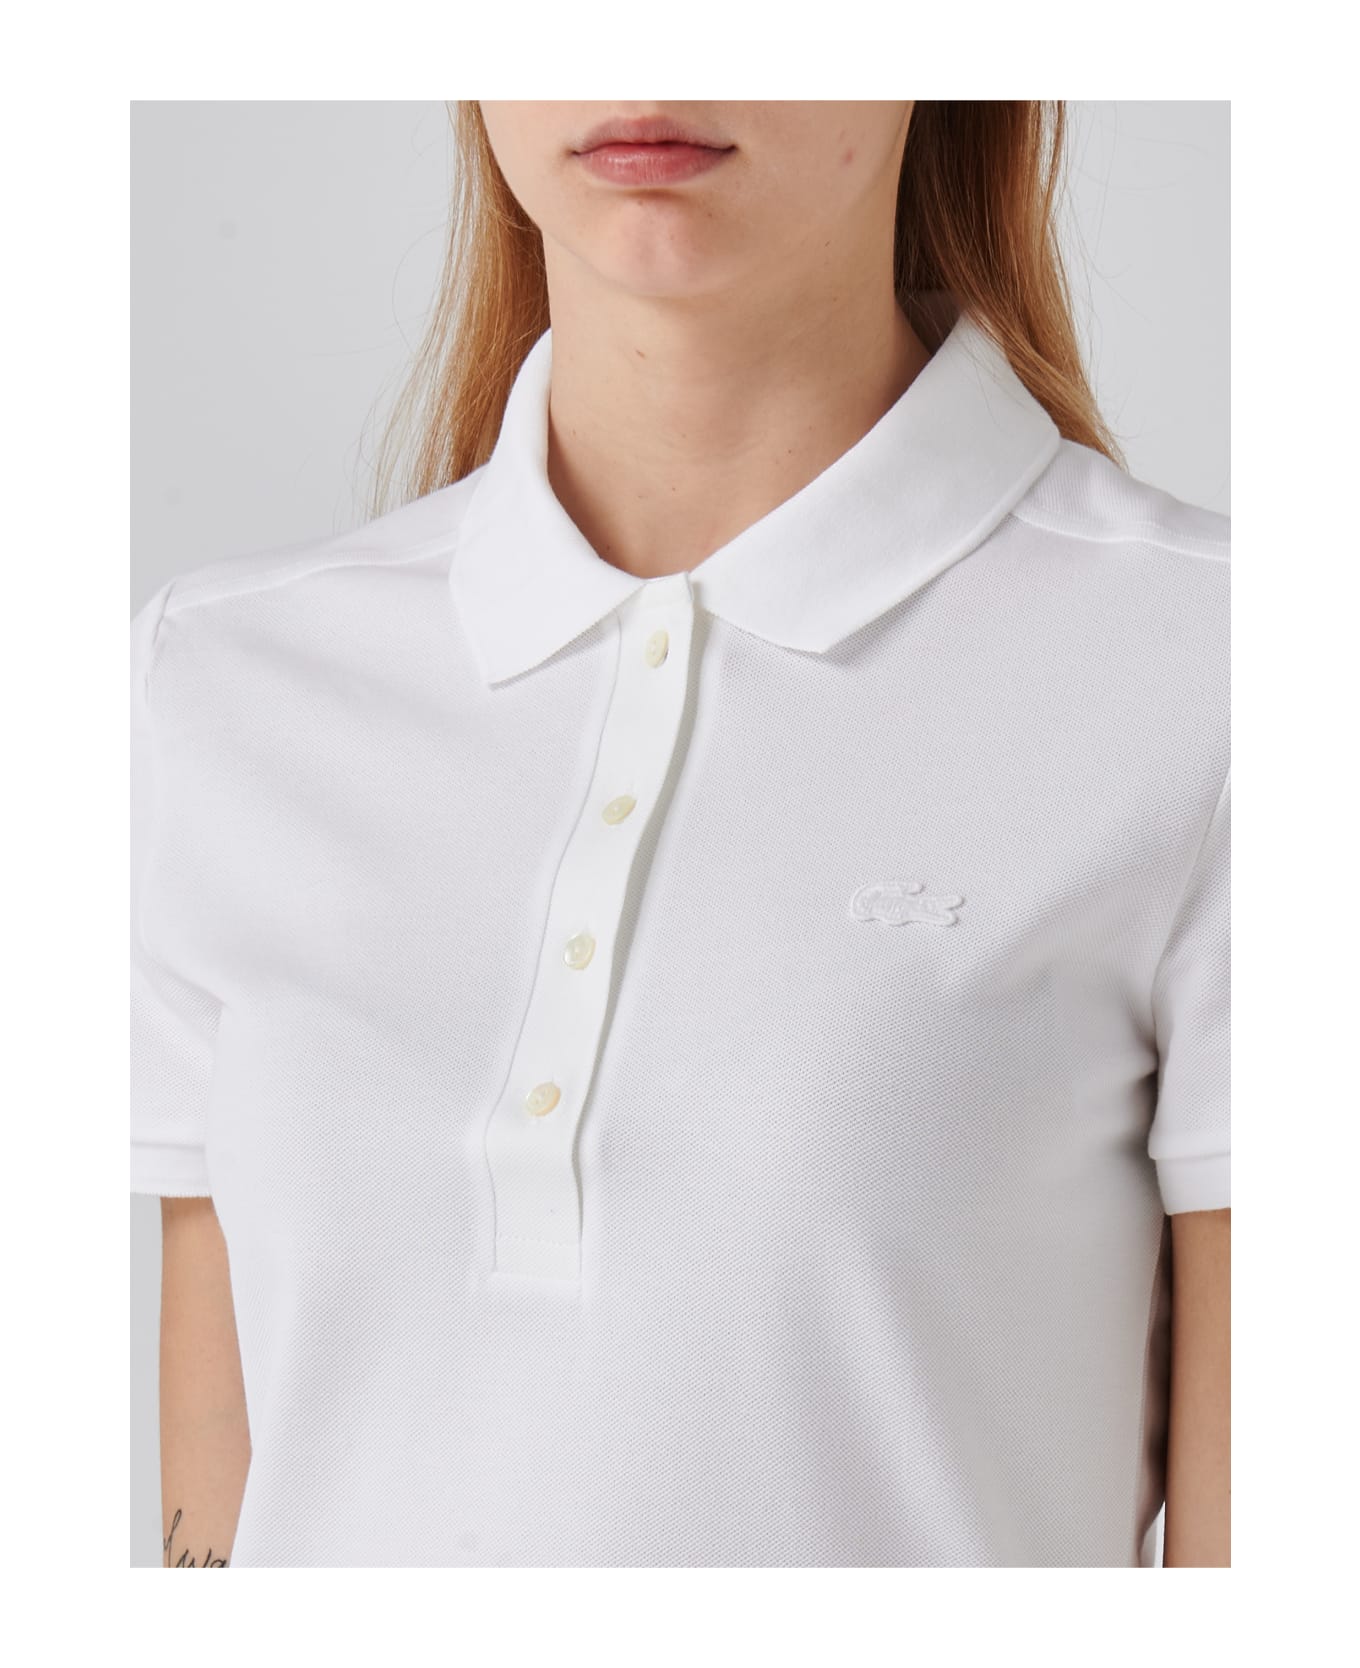 Lacoste Cotton T-shirt - BIANCO ポロシャツ